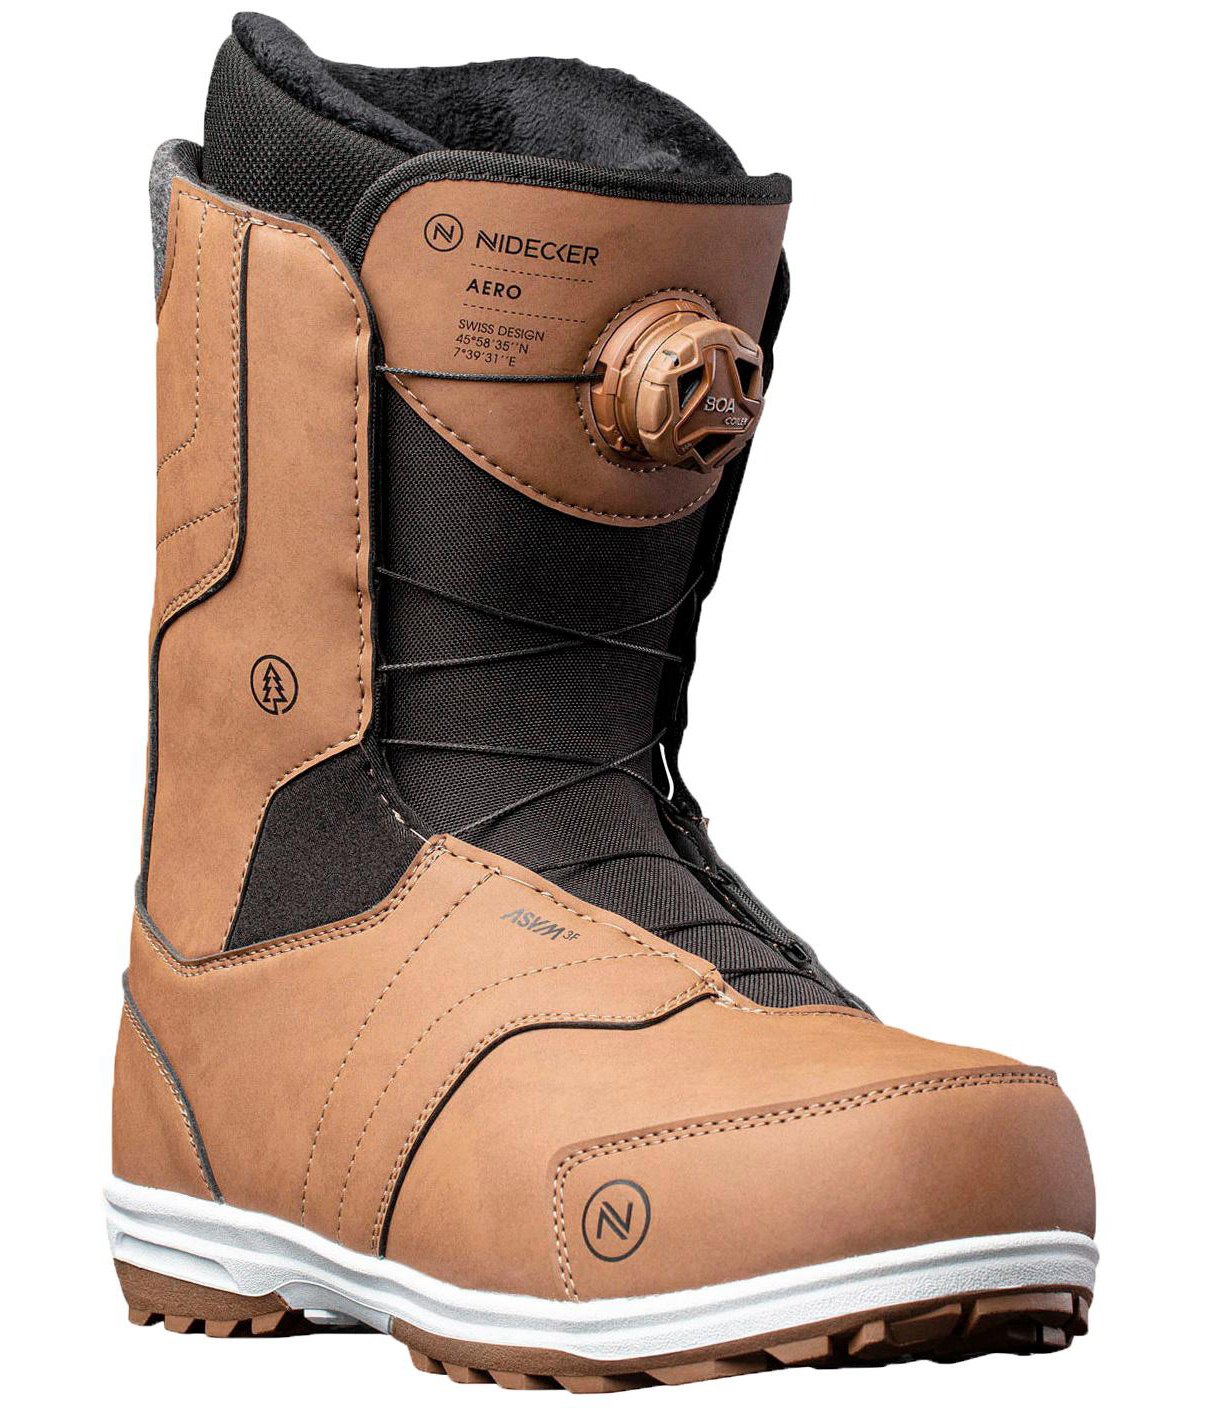 Ботинки для сноуборда Nidecker Aero 2021/2022, brown, 25 см